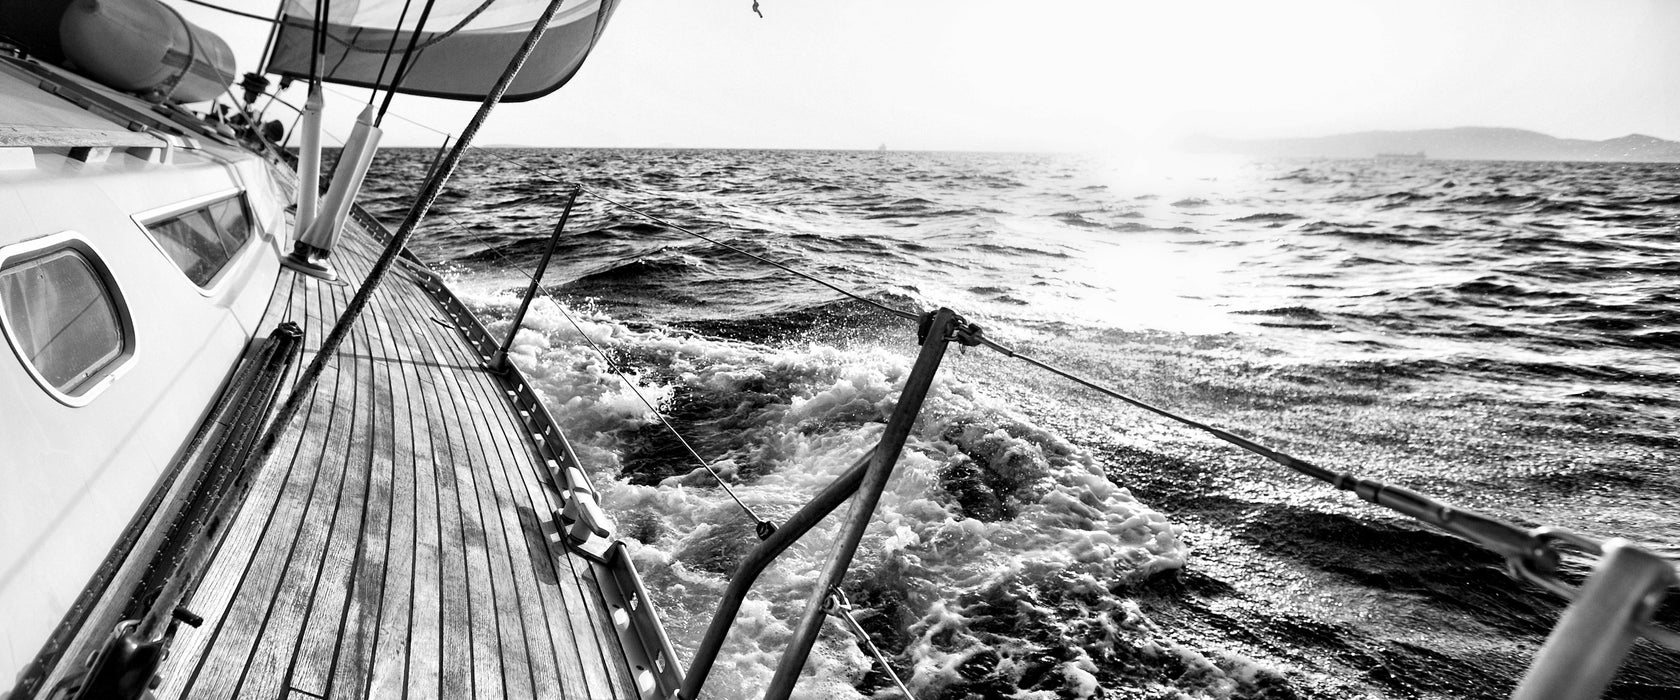 Segelboot im Meer, Glasbild Panorama